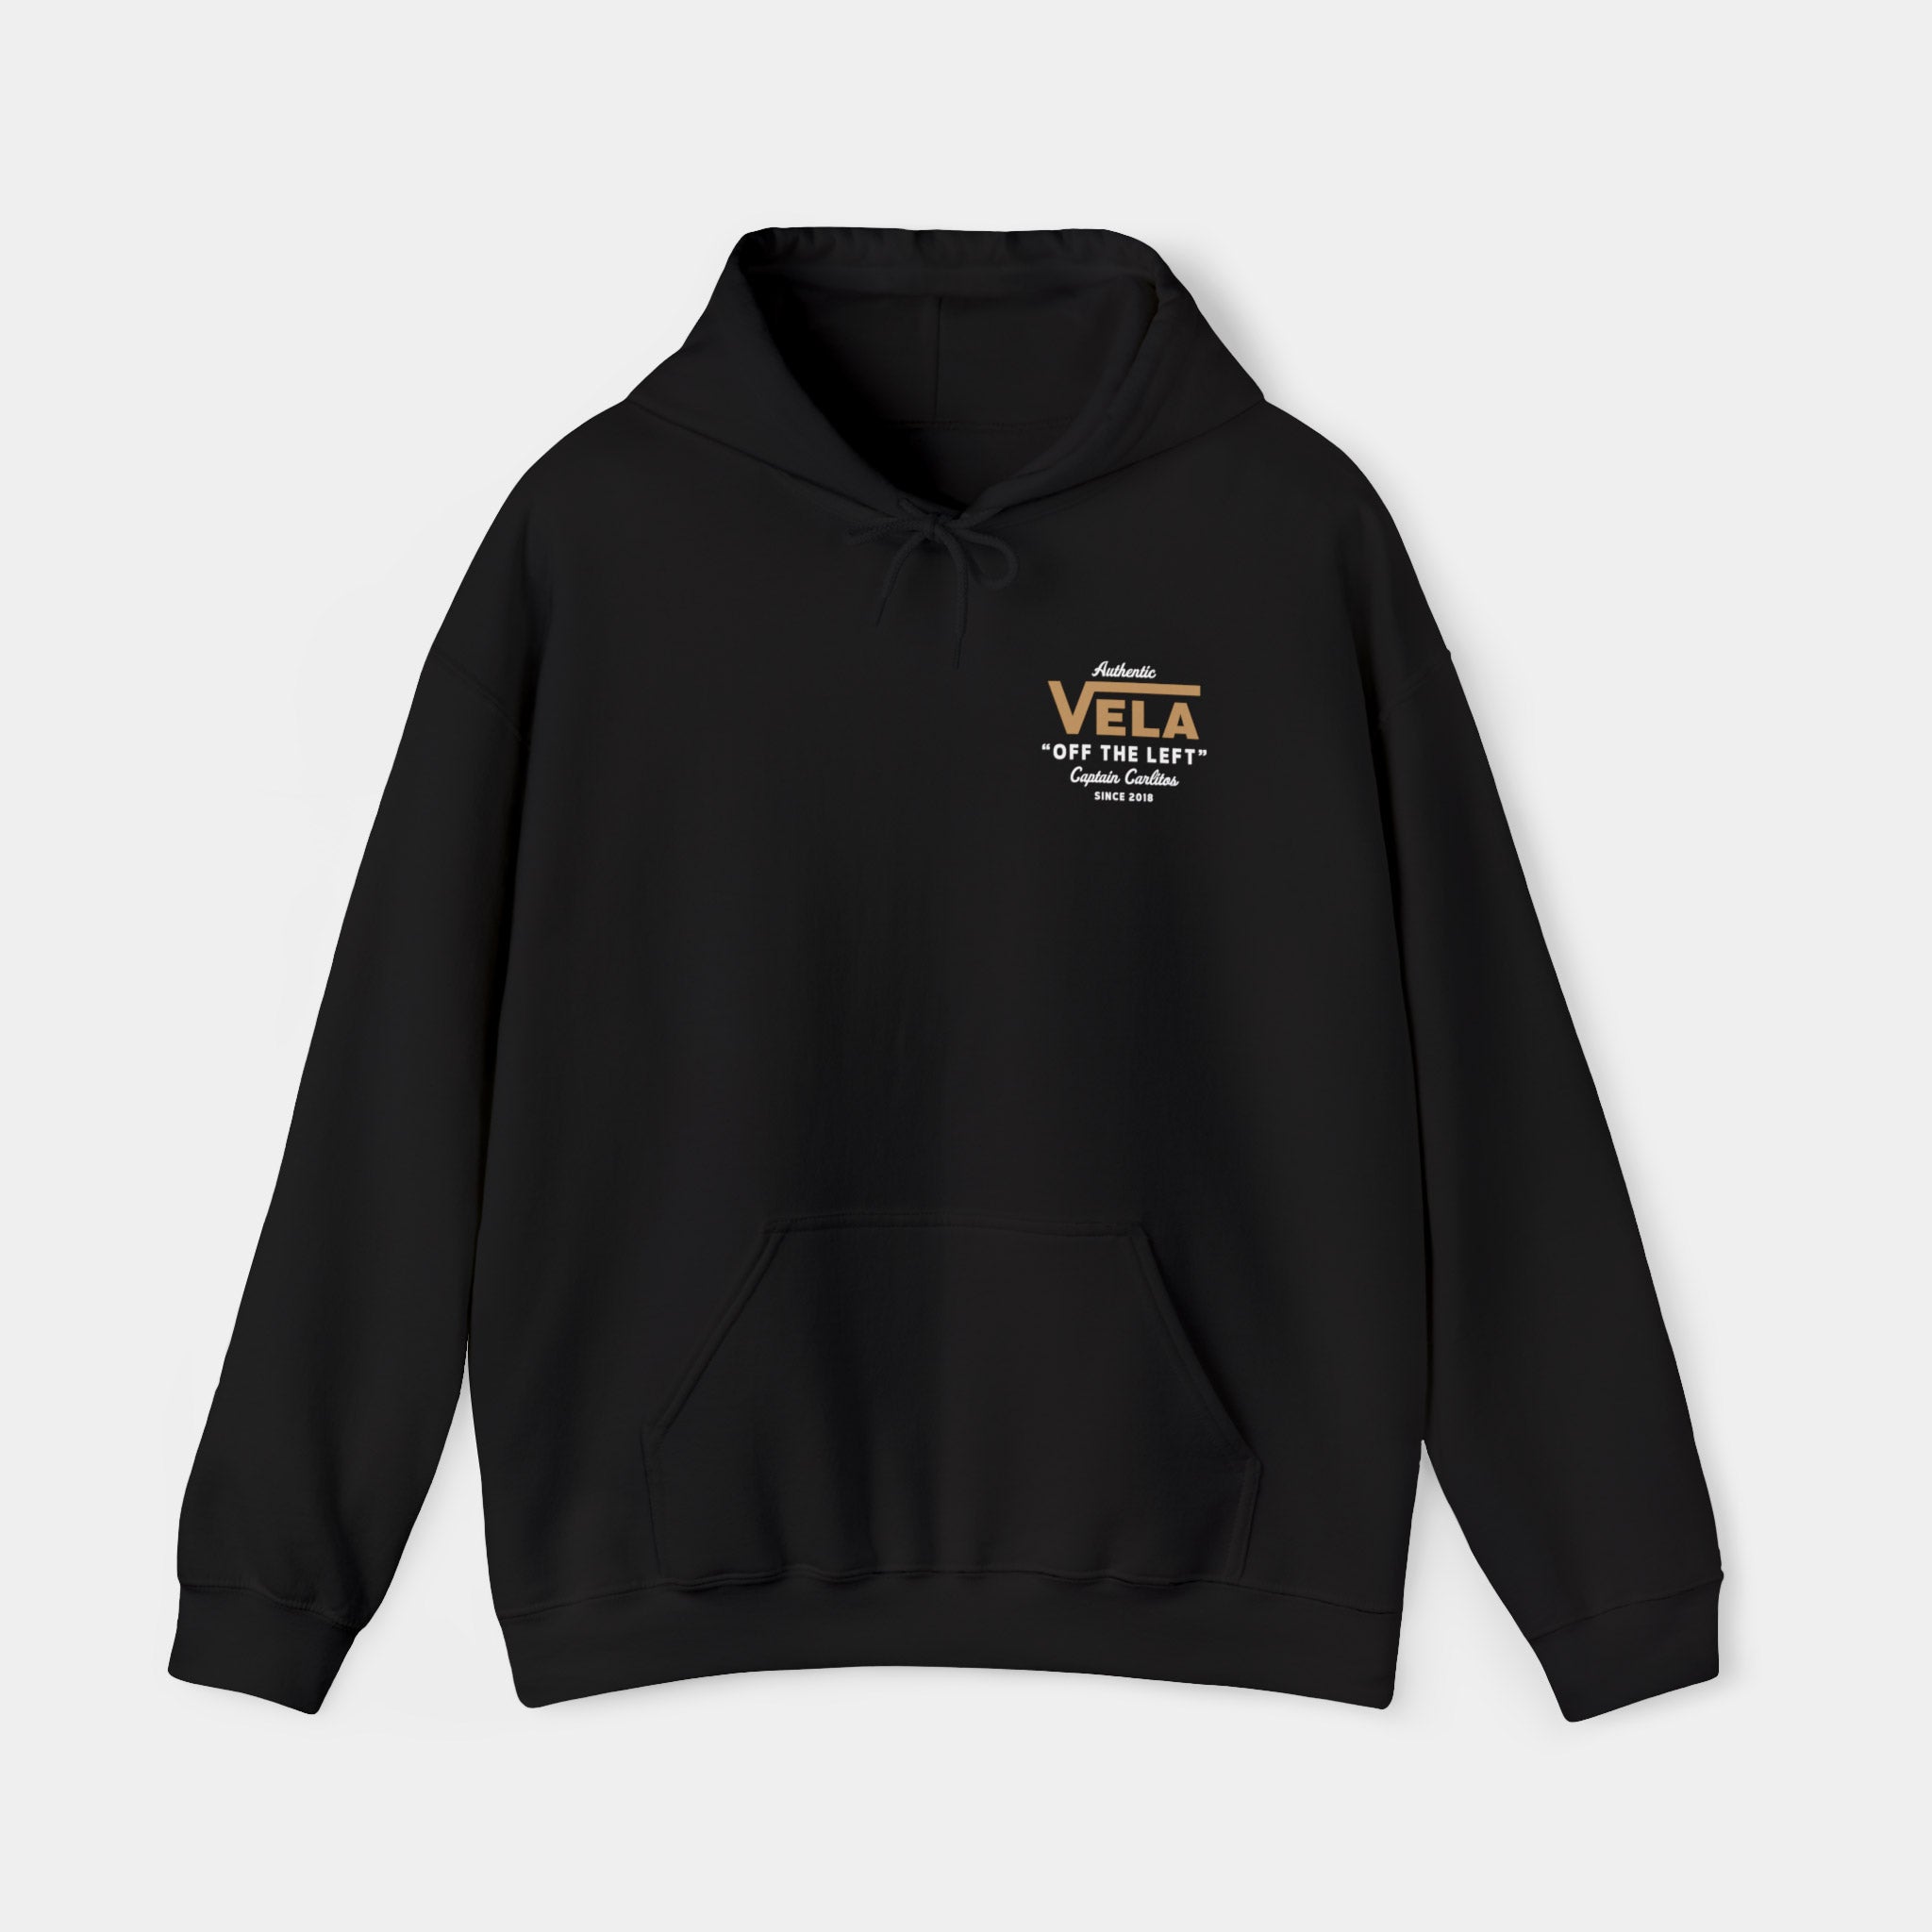 Authentic Vela "Off the Left" (LAFC) Hooded Sweatshirt